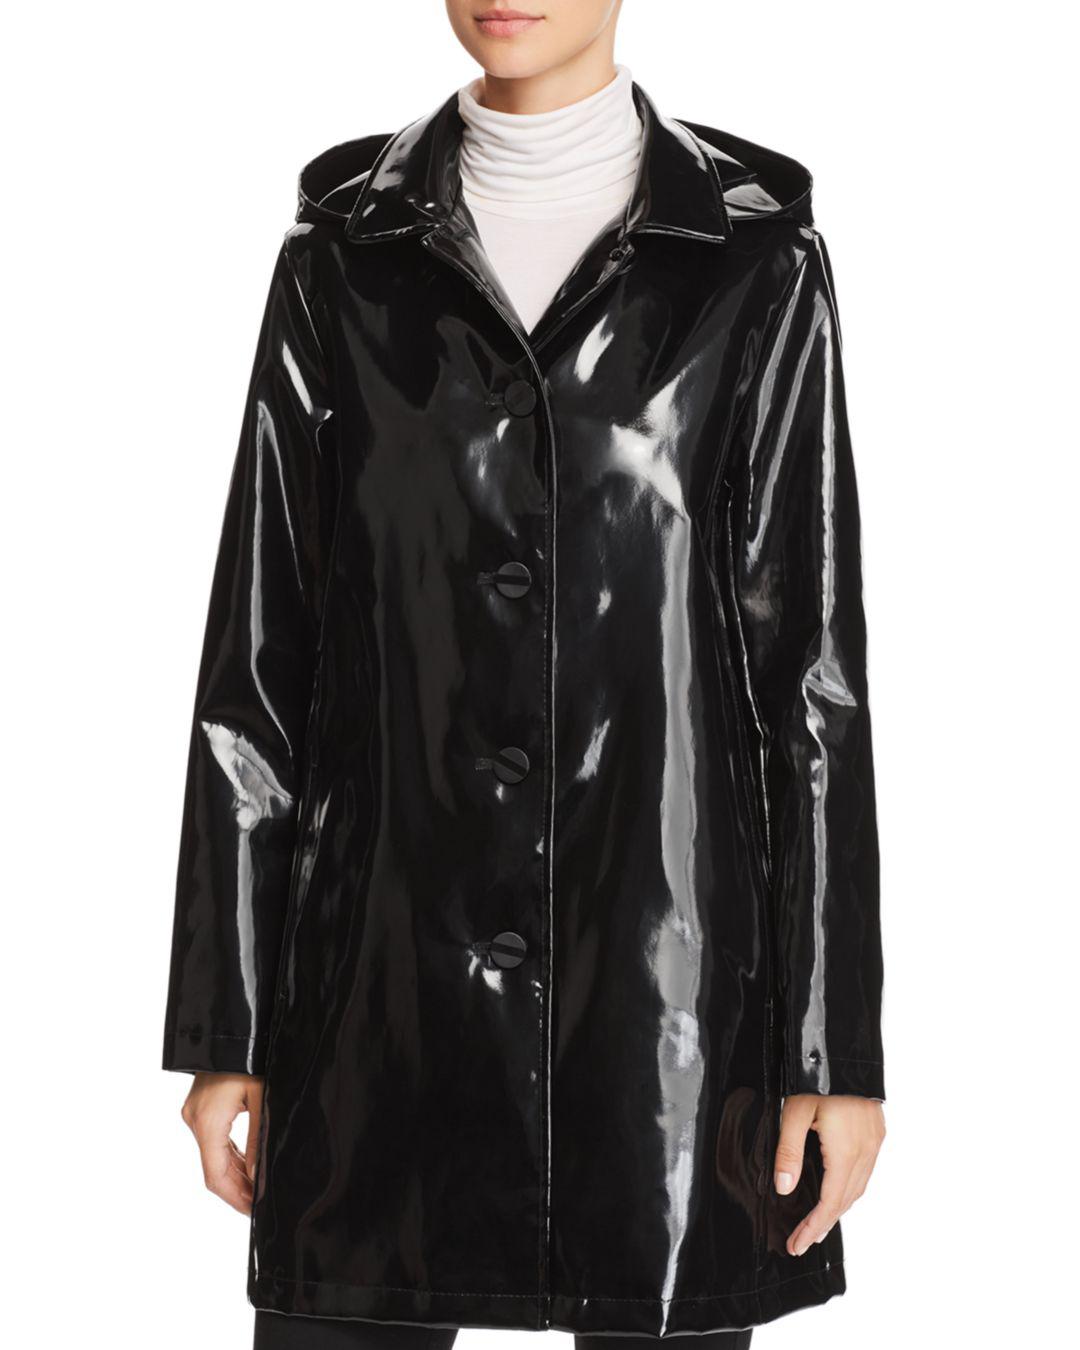 Jane Post Iconic Slicker Raincoat in Black - Lyst